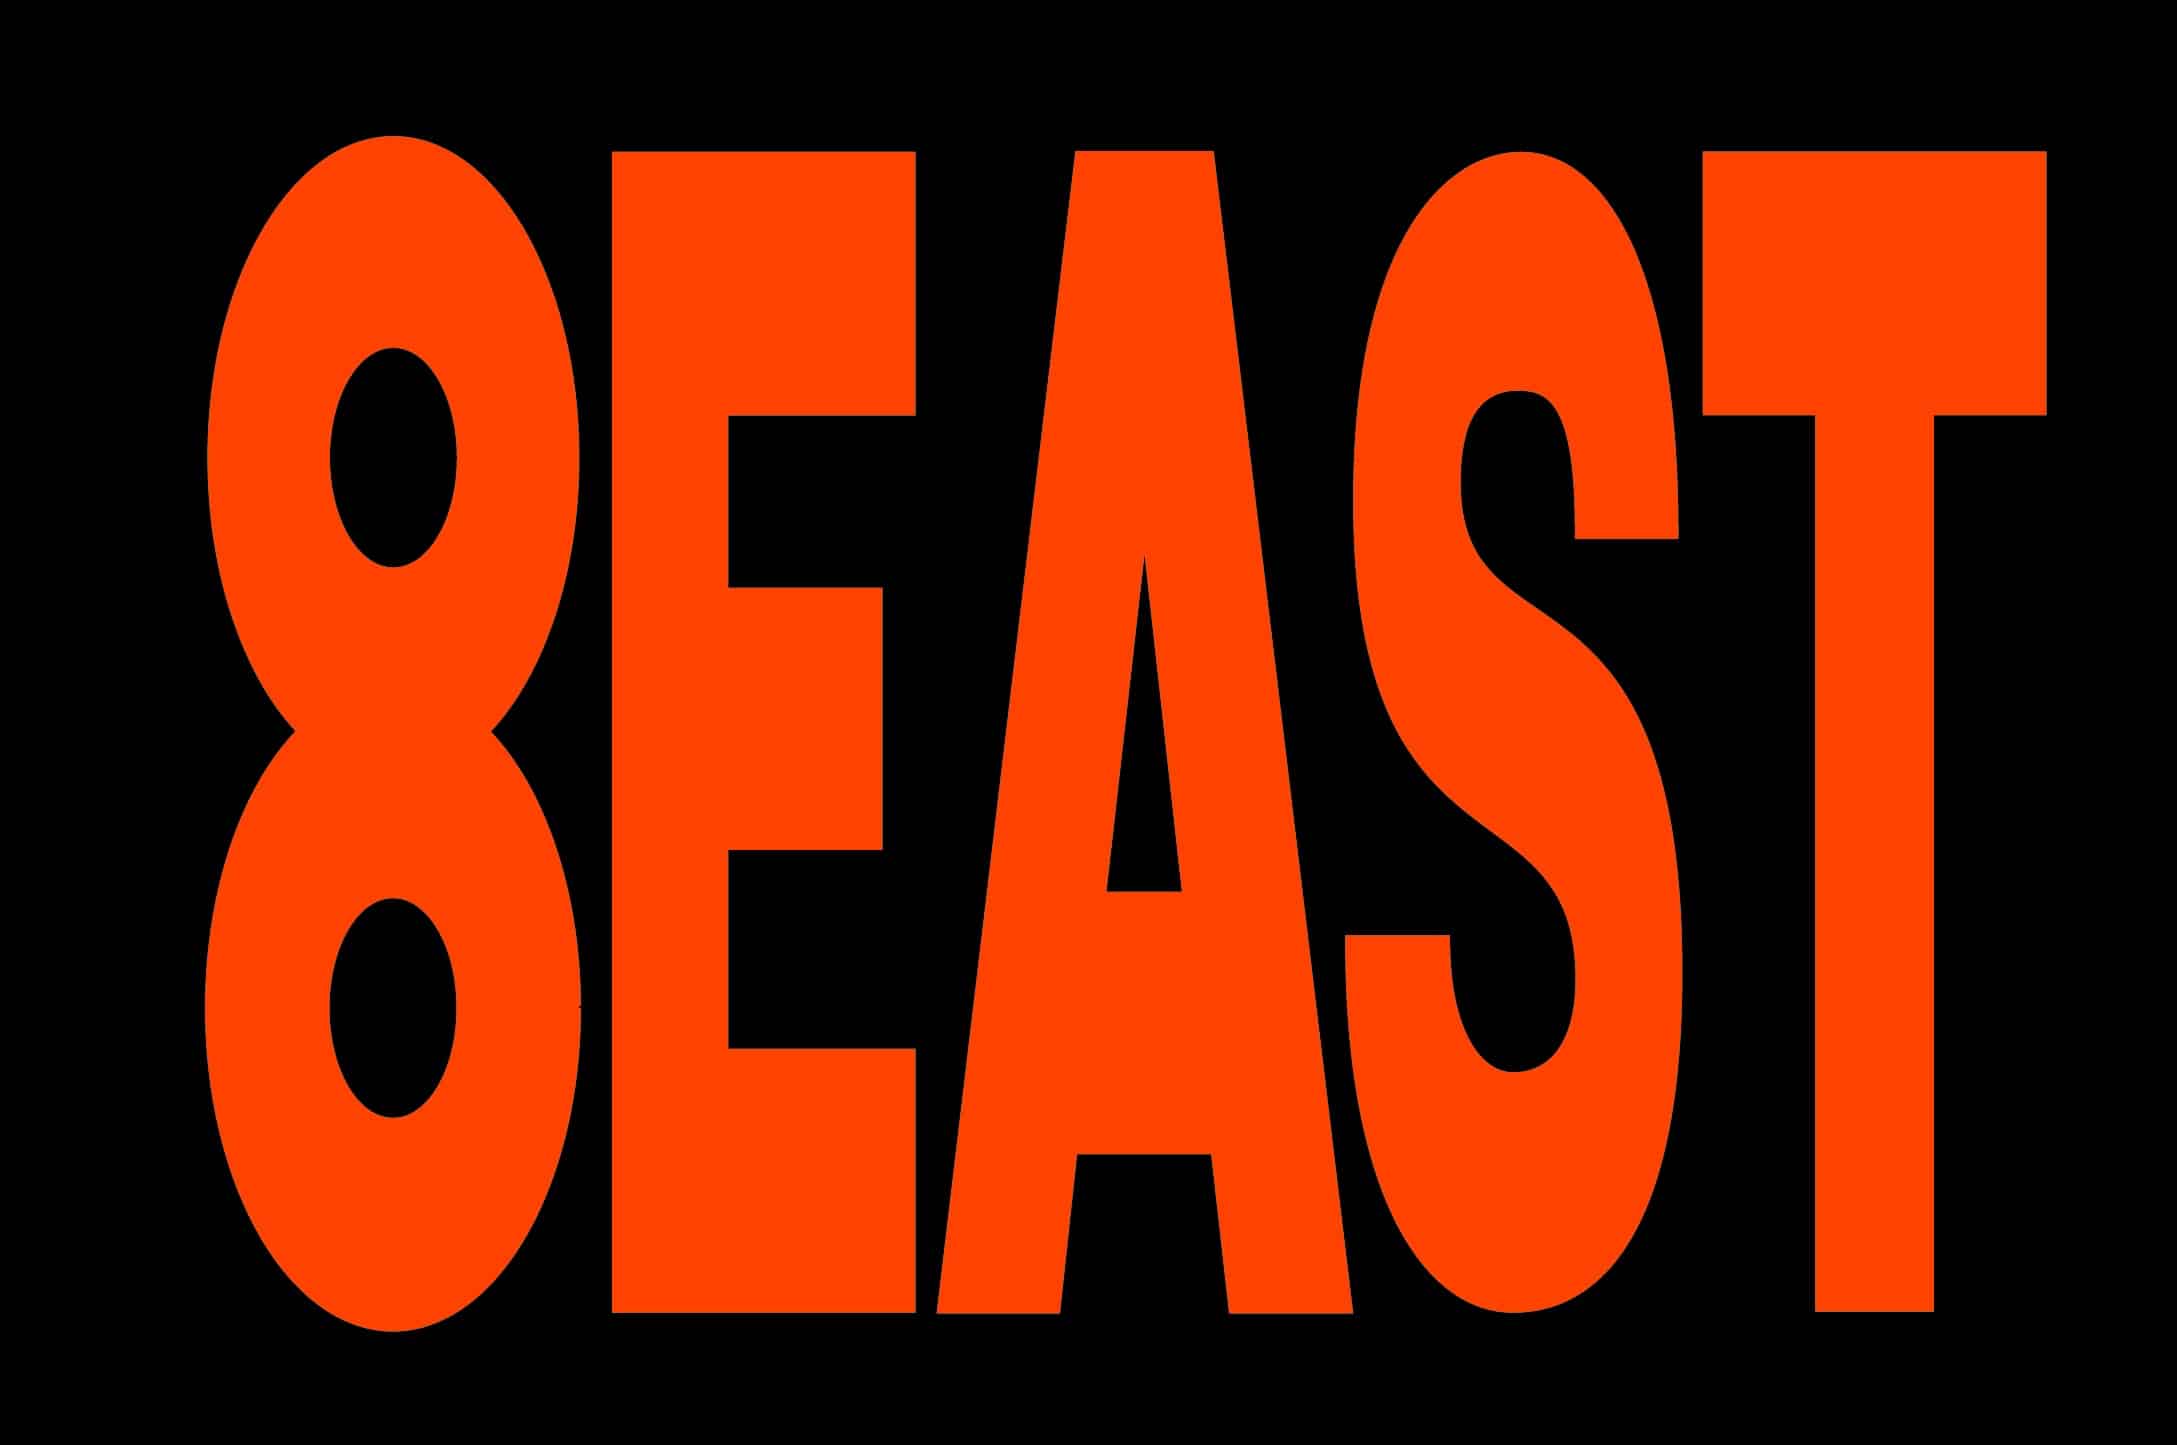 8East Logo